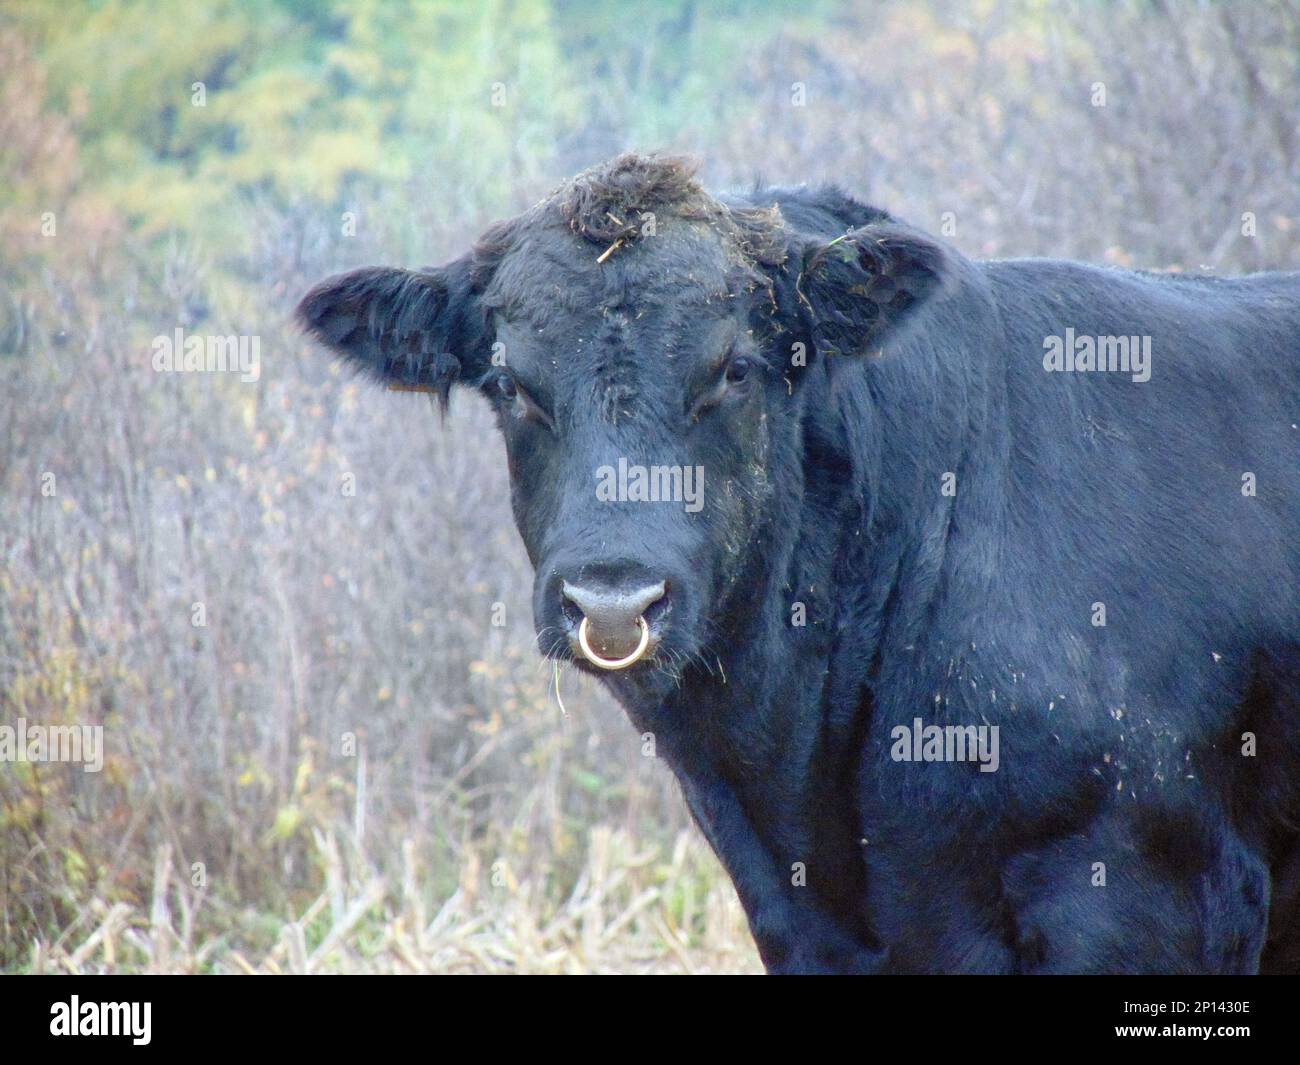 Black Angus bull portrait. Bull Stock Photo